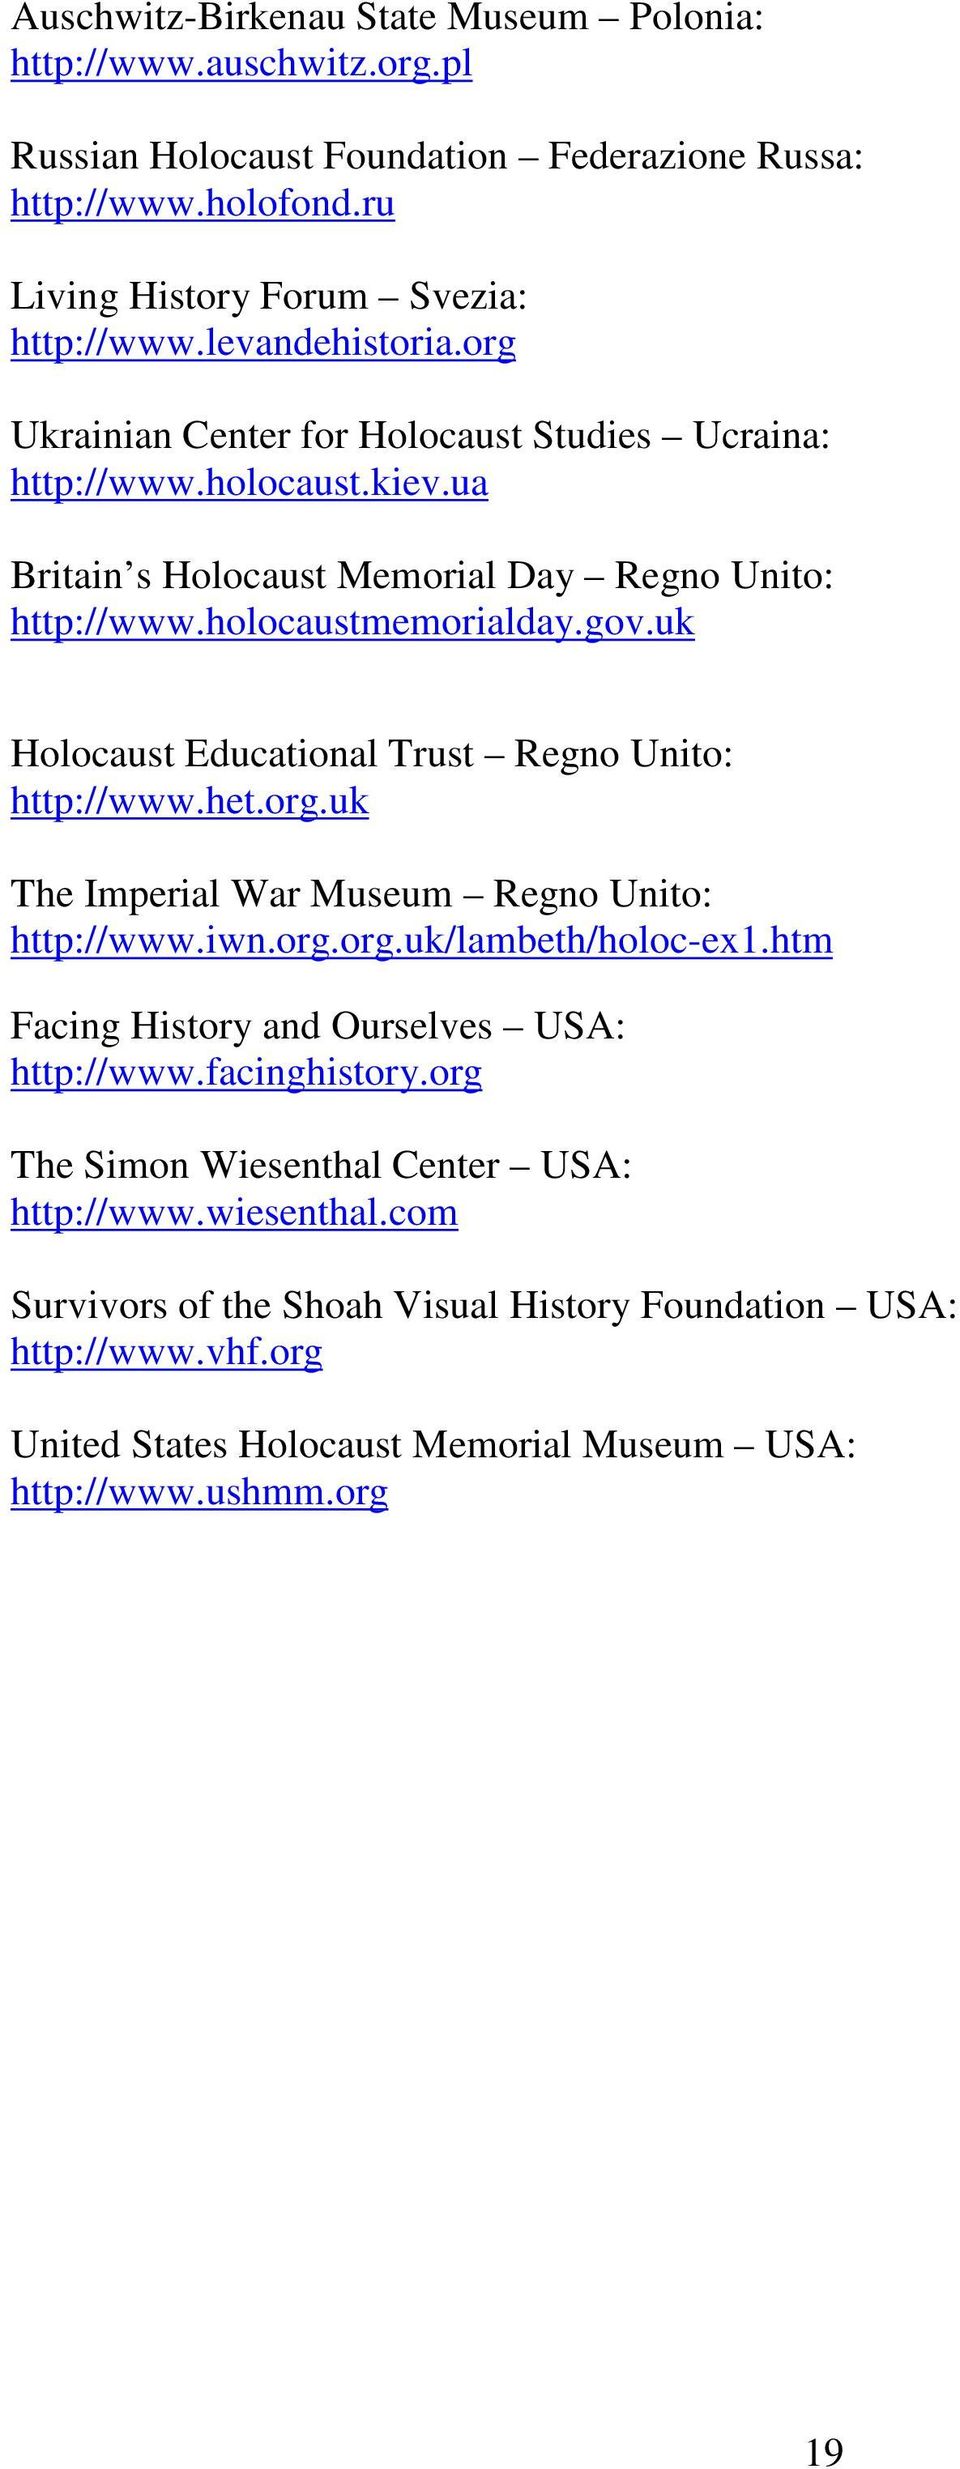 uk Holocaust Educational Trust Regno Unito: http://www.het.org.uk The Imperial War Museum Regno Unito: http://www.iwn.org.org.uk/lambeth/holoc-ex1.